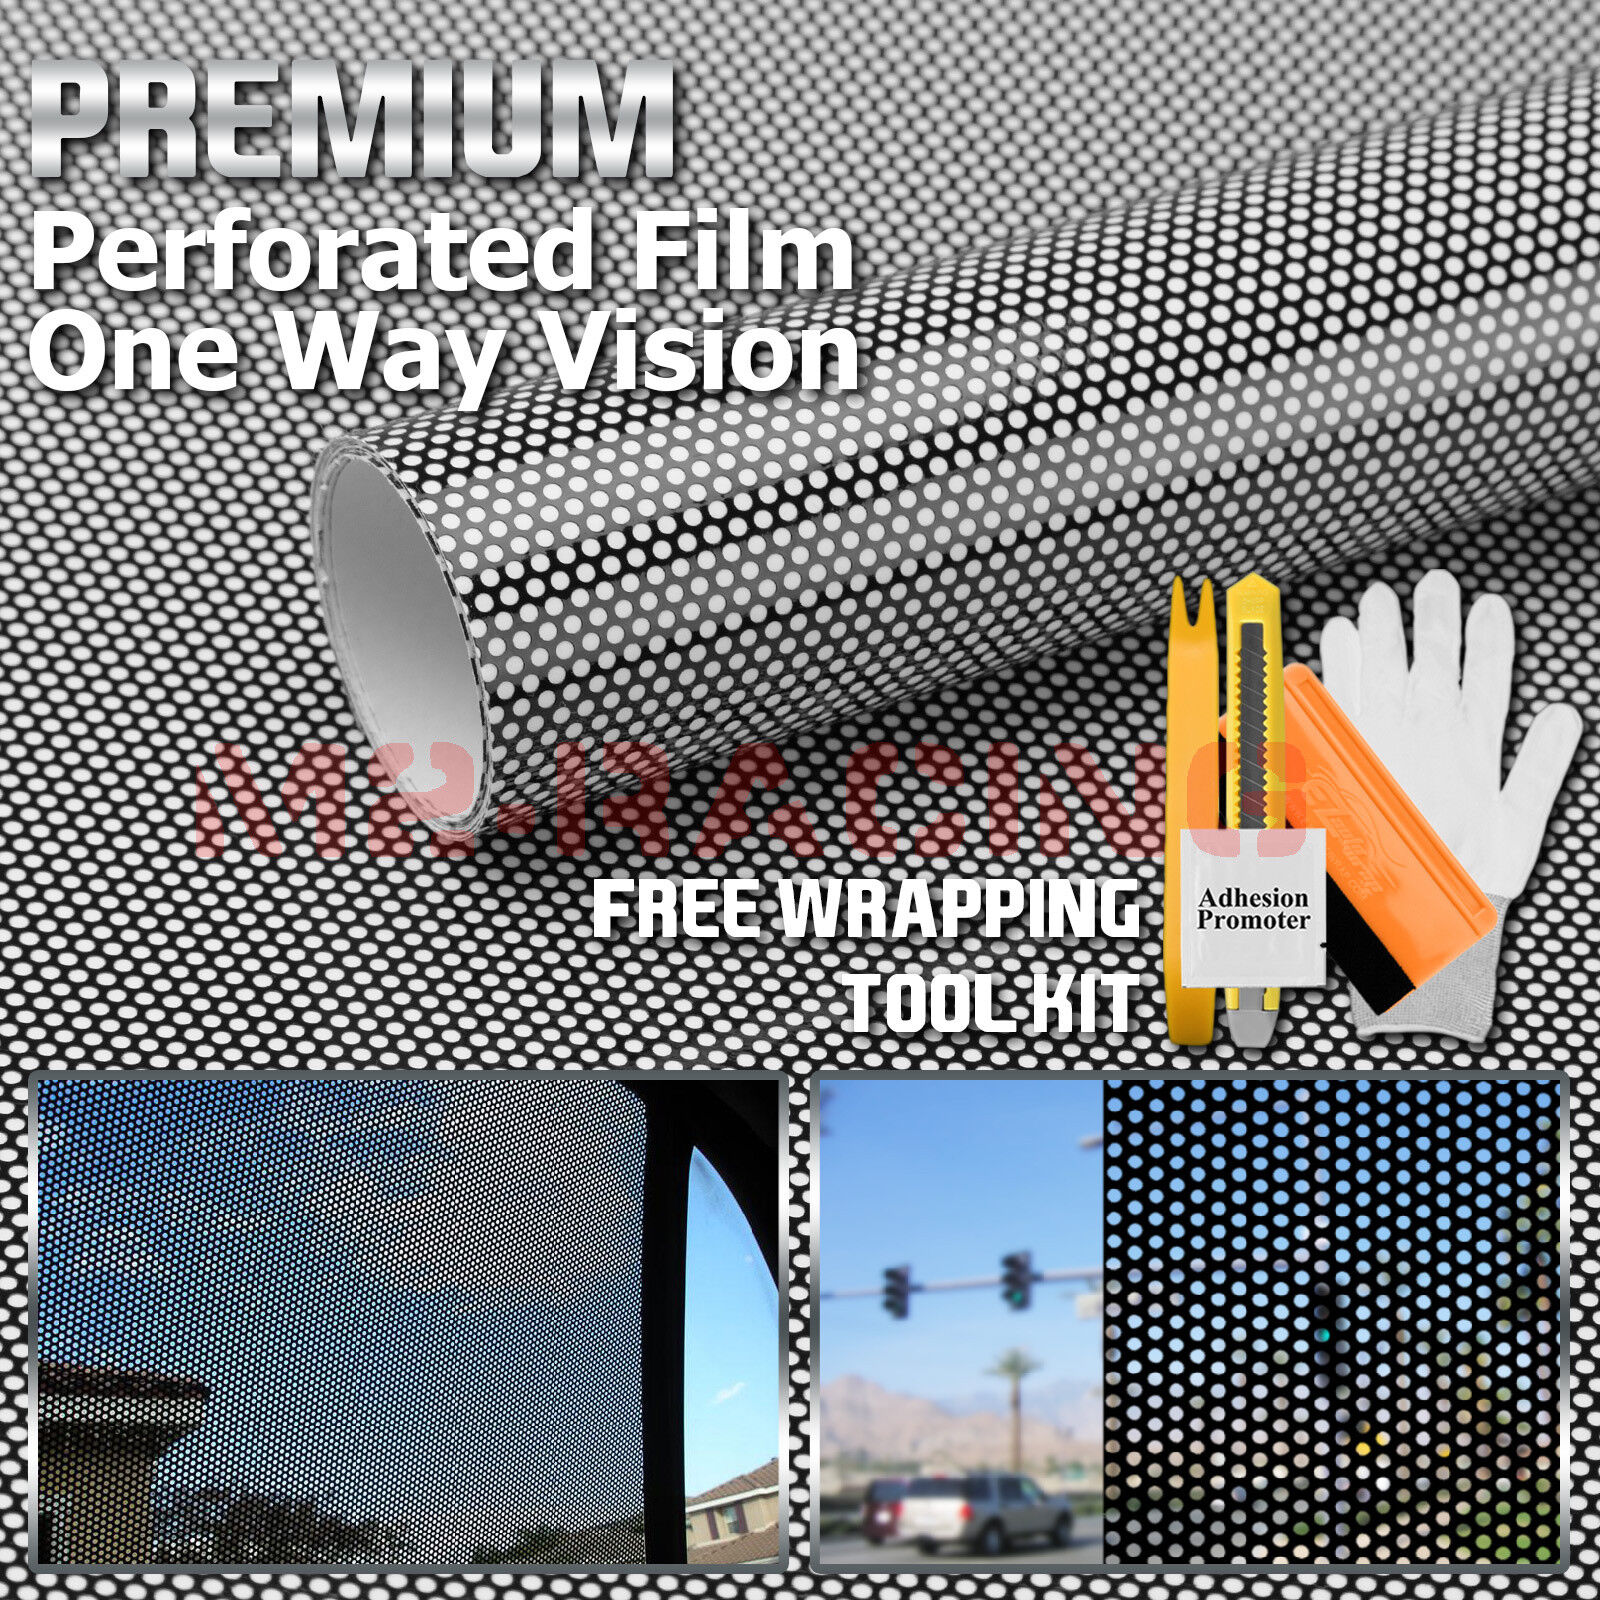 【One Way Vision】 Black Perforated Print Media Vinyl Window Sticker Sheet Film